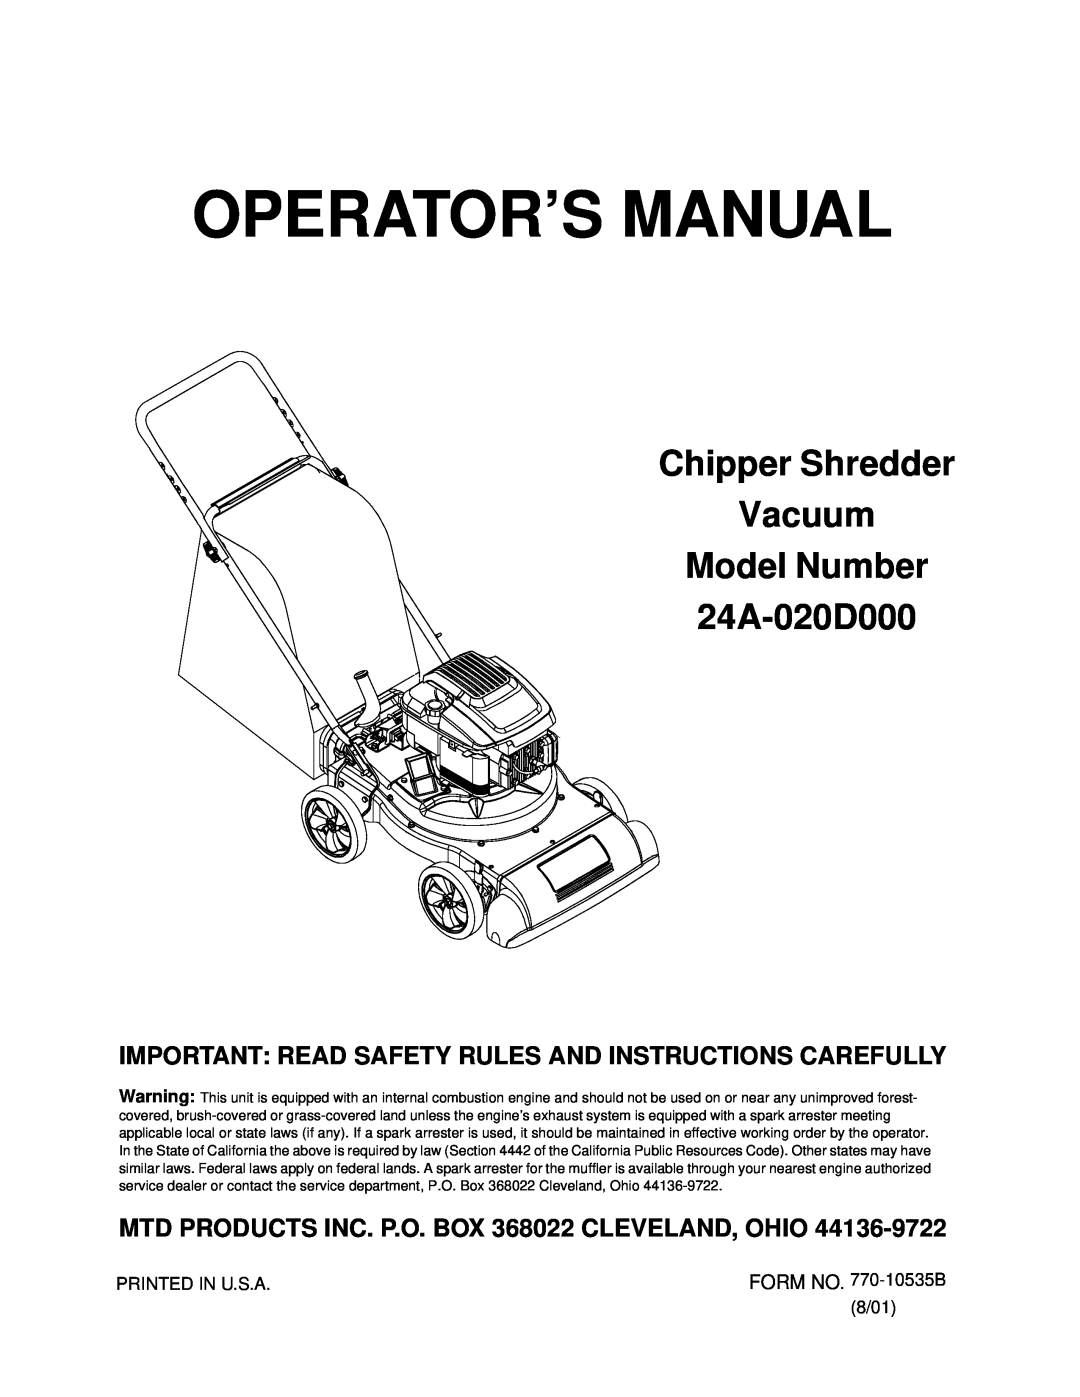 MTD manual Operator’S Manual, Chipper Shredder Vacuum Model Number 24A-020D000 